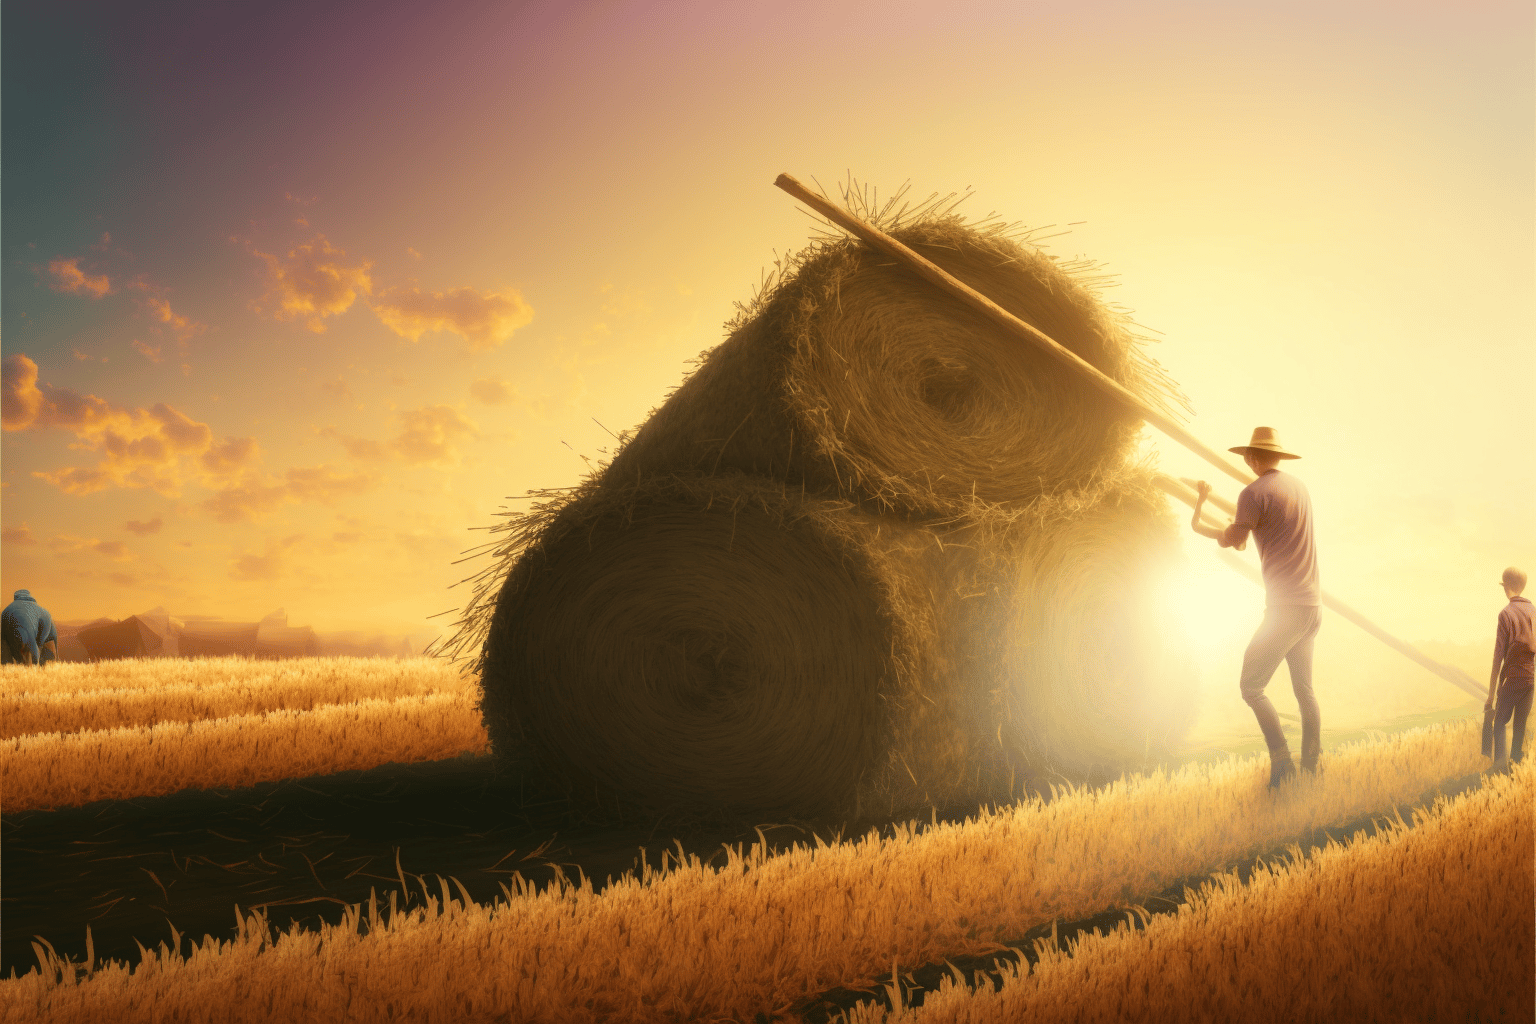 Make hay while the sun shines